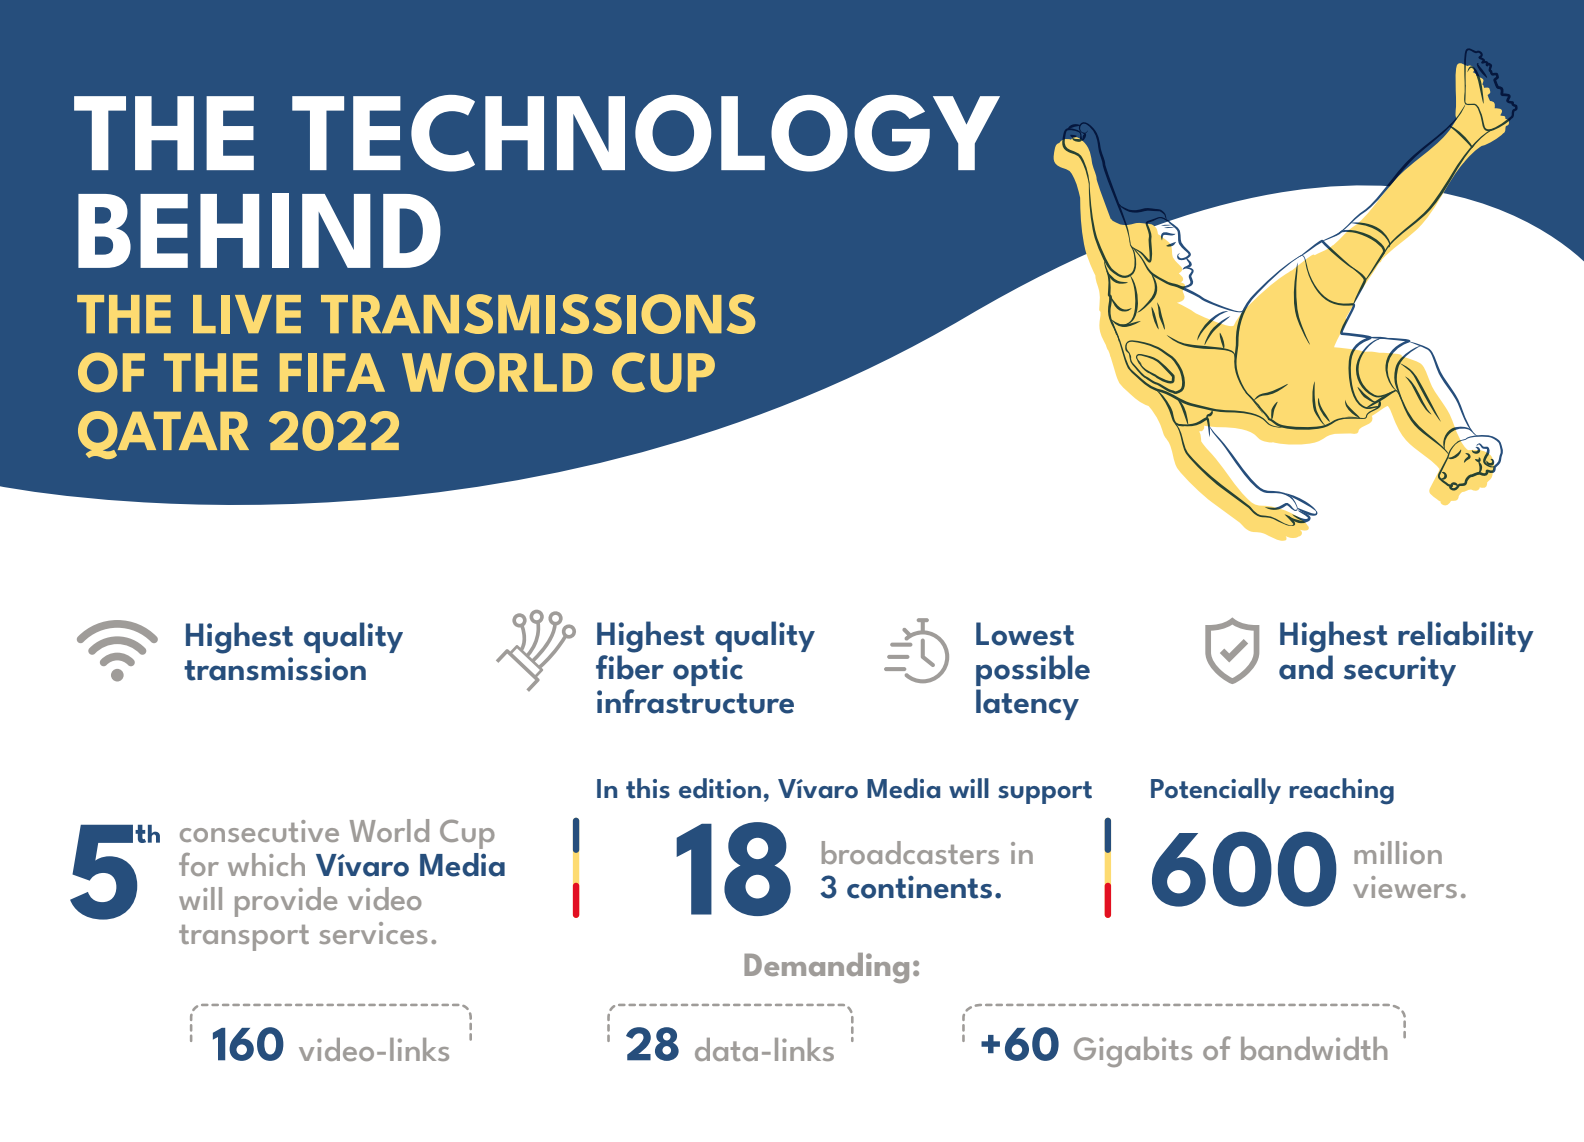 Behind Vivaro Medias Transmission of the FIFA World Cup Qatar 2022